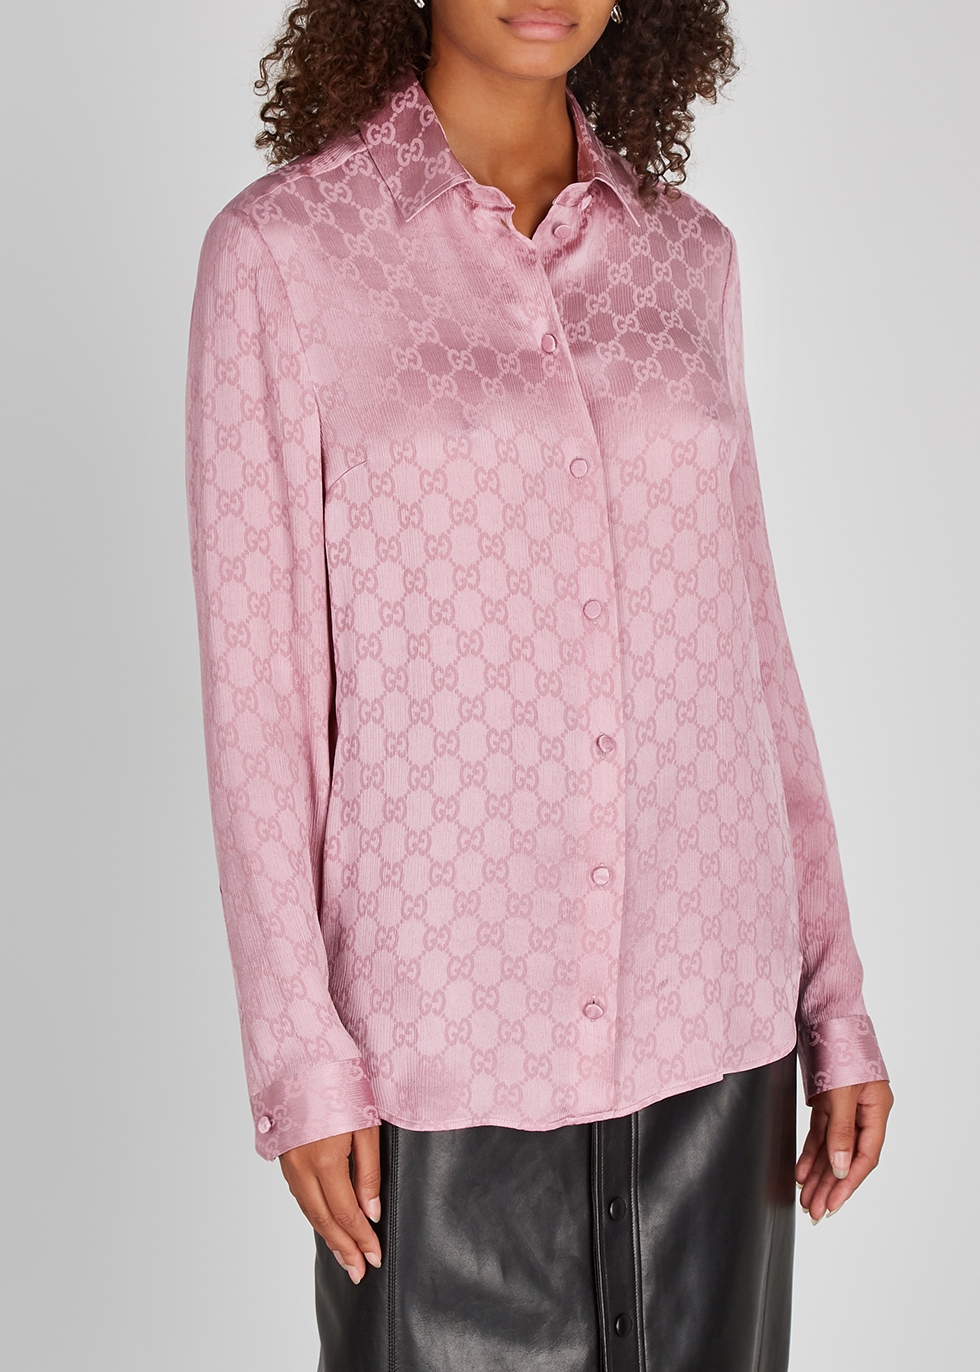 gucci women's silk blouse